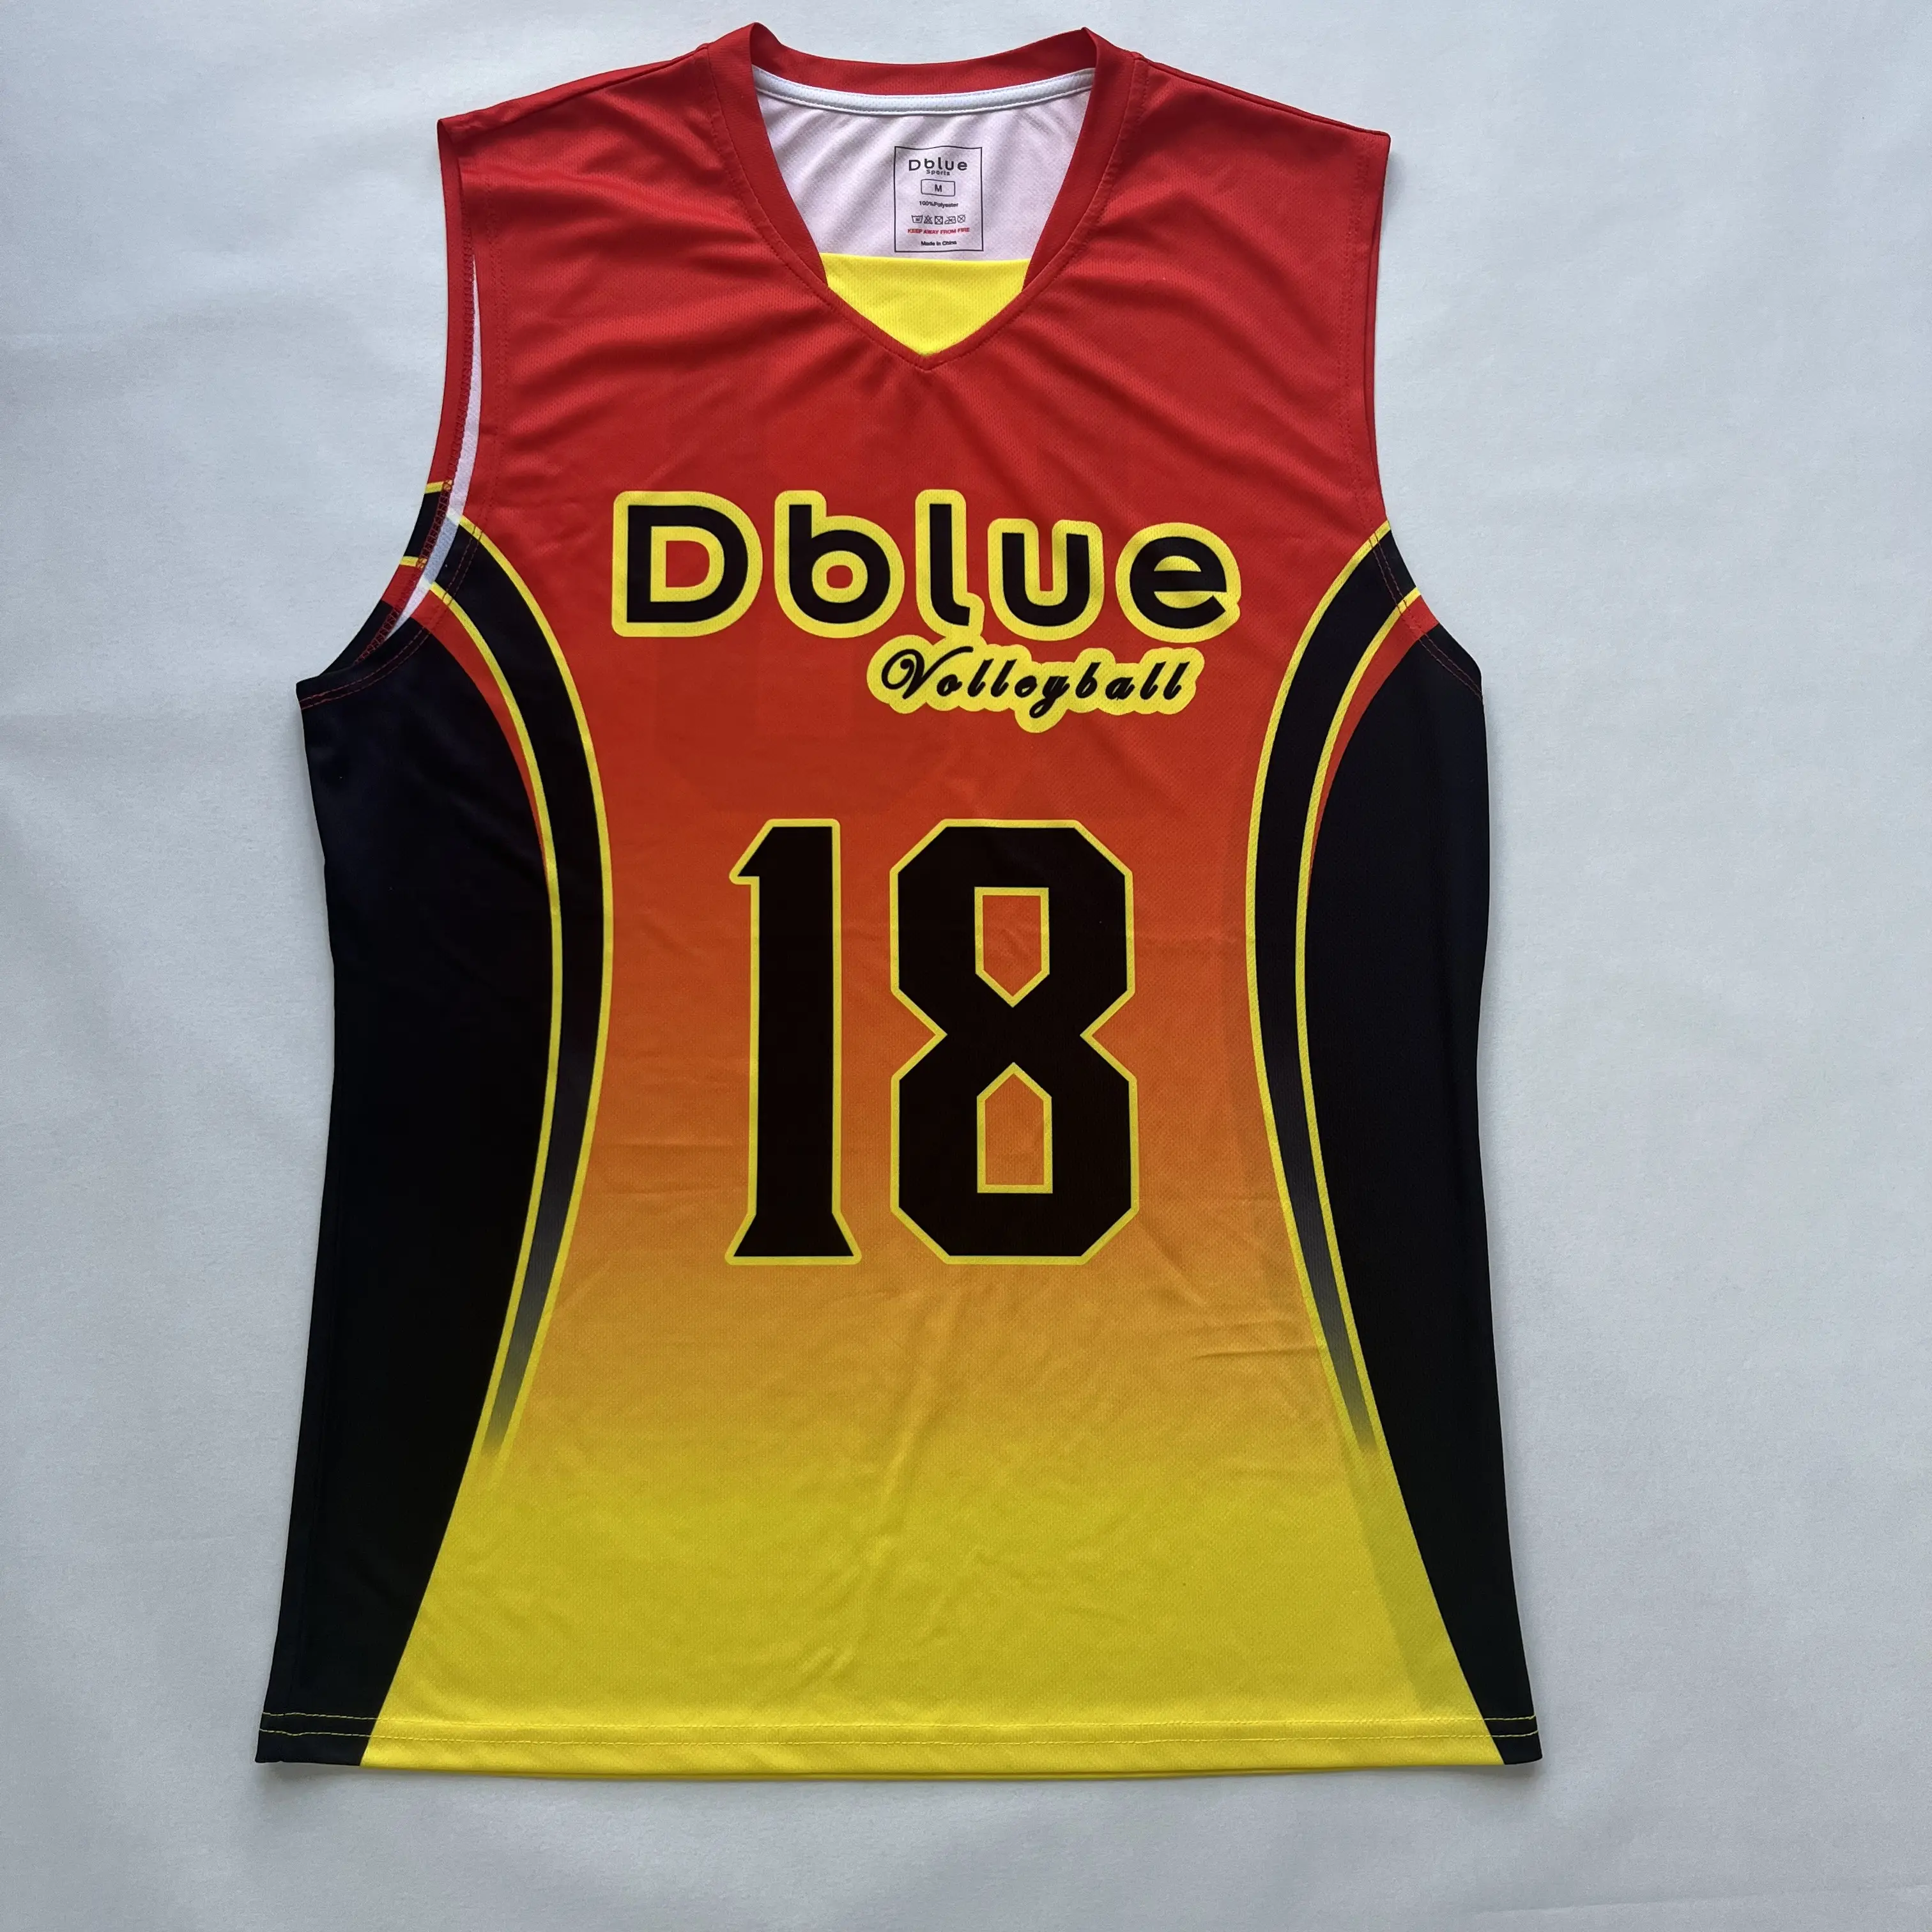 Dblue vente en gros maillots de volley-ball équipe de club sublimation mans femmes uniformes de volley-ball